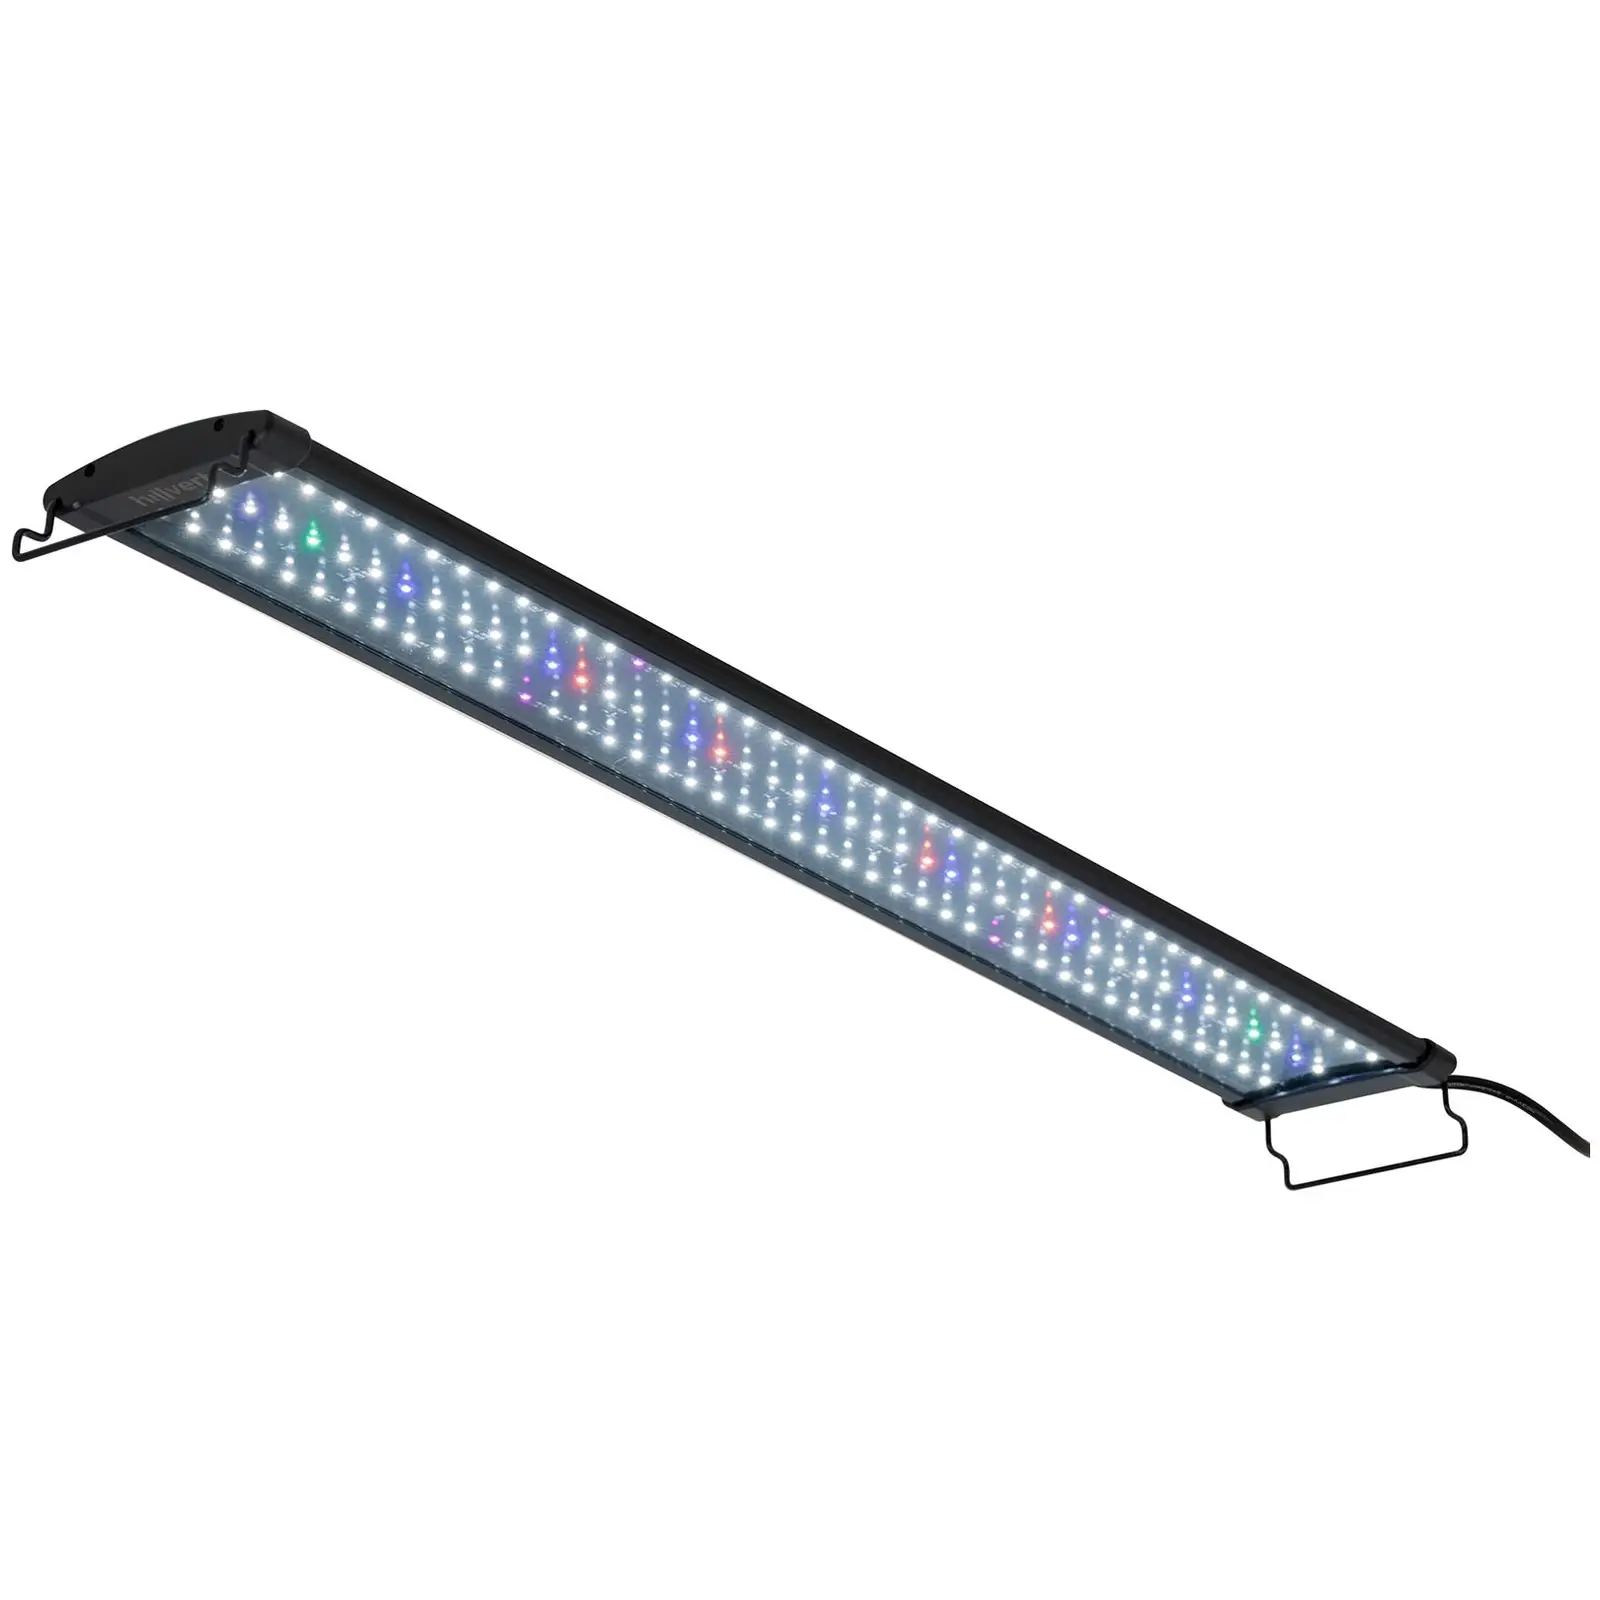 Lampa LED do akwarium  - 129 diod LED - 25 W - 87 cm